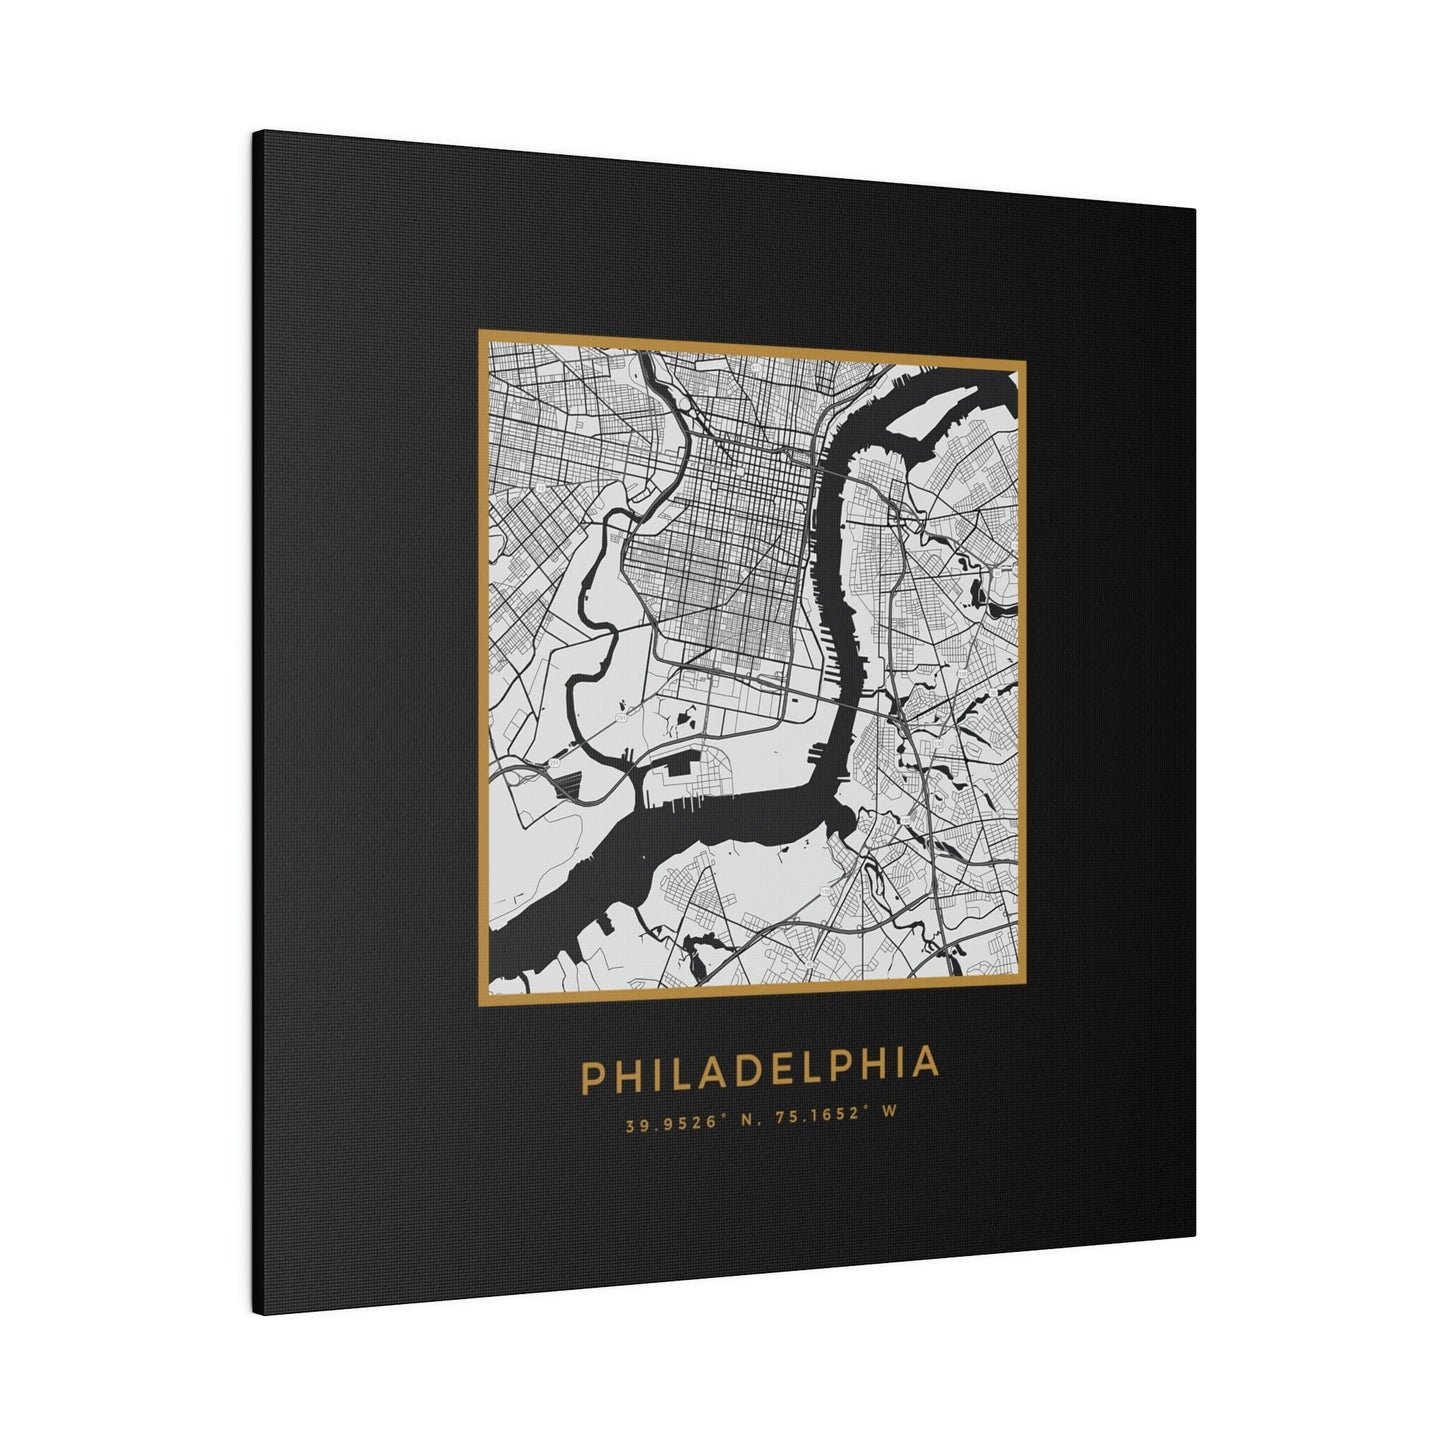 Philadelphia Hometown on Black Canvas (Golden Trim)